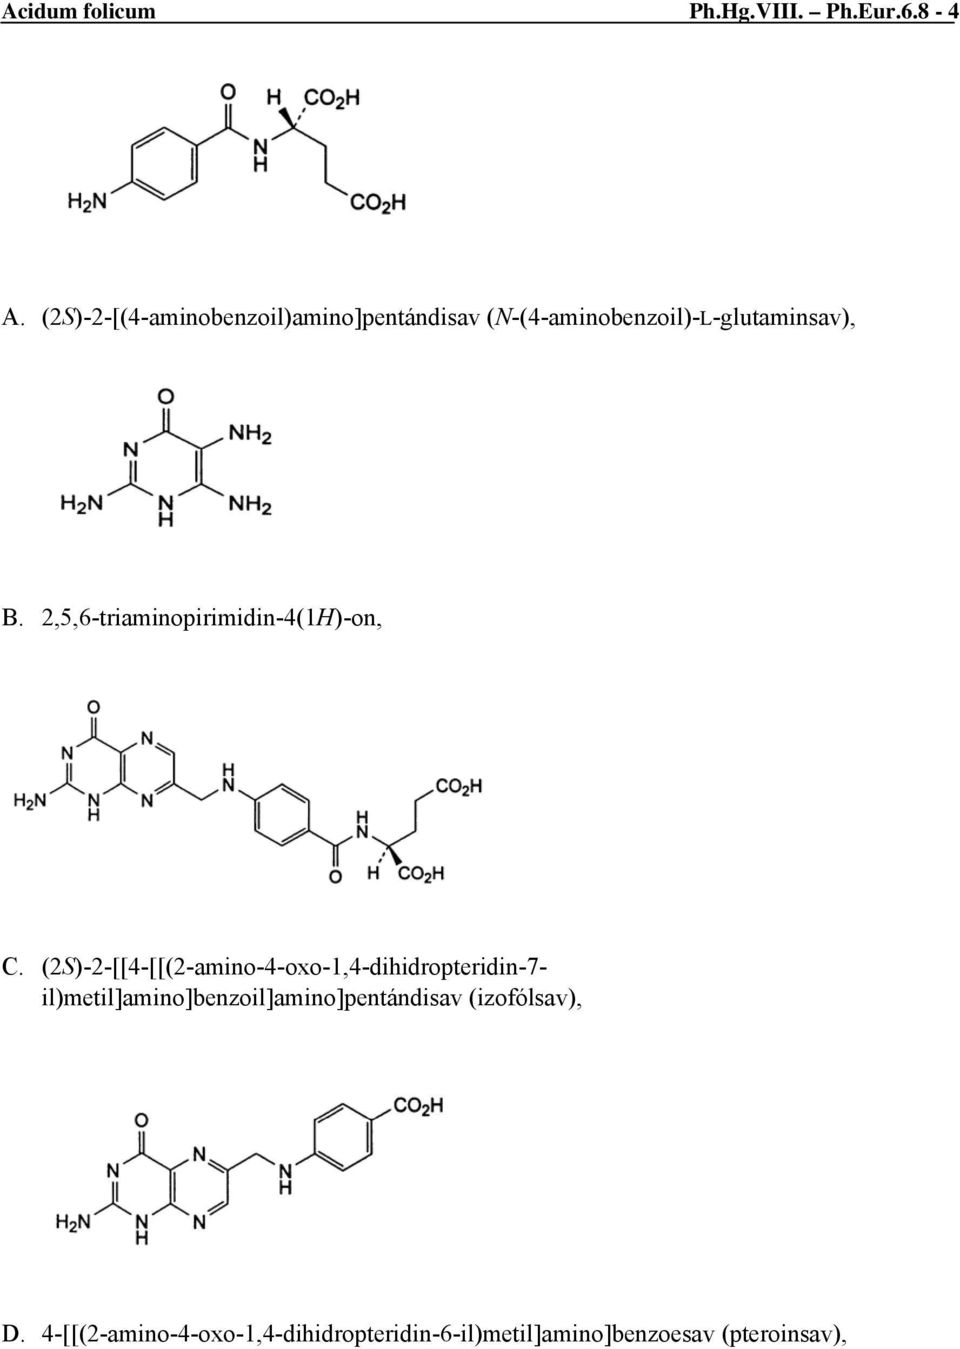 2,5,6-triaminopirimidin-4(1H)-on, C.